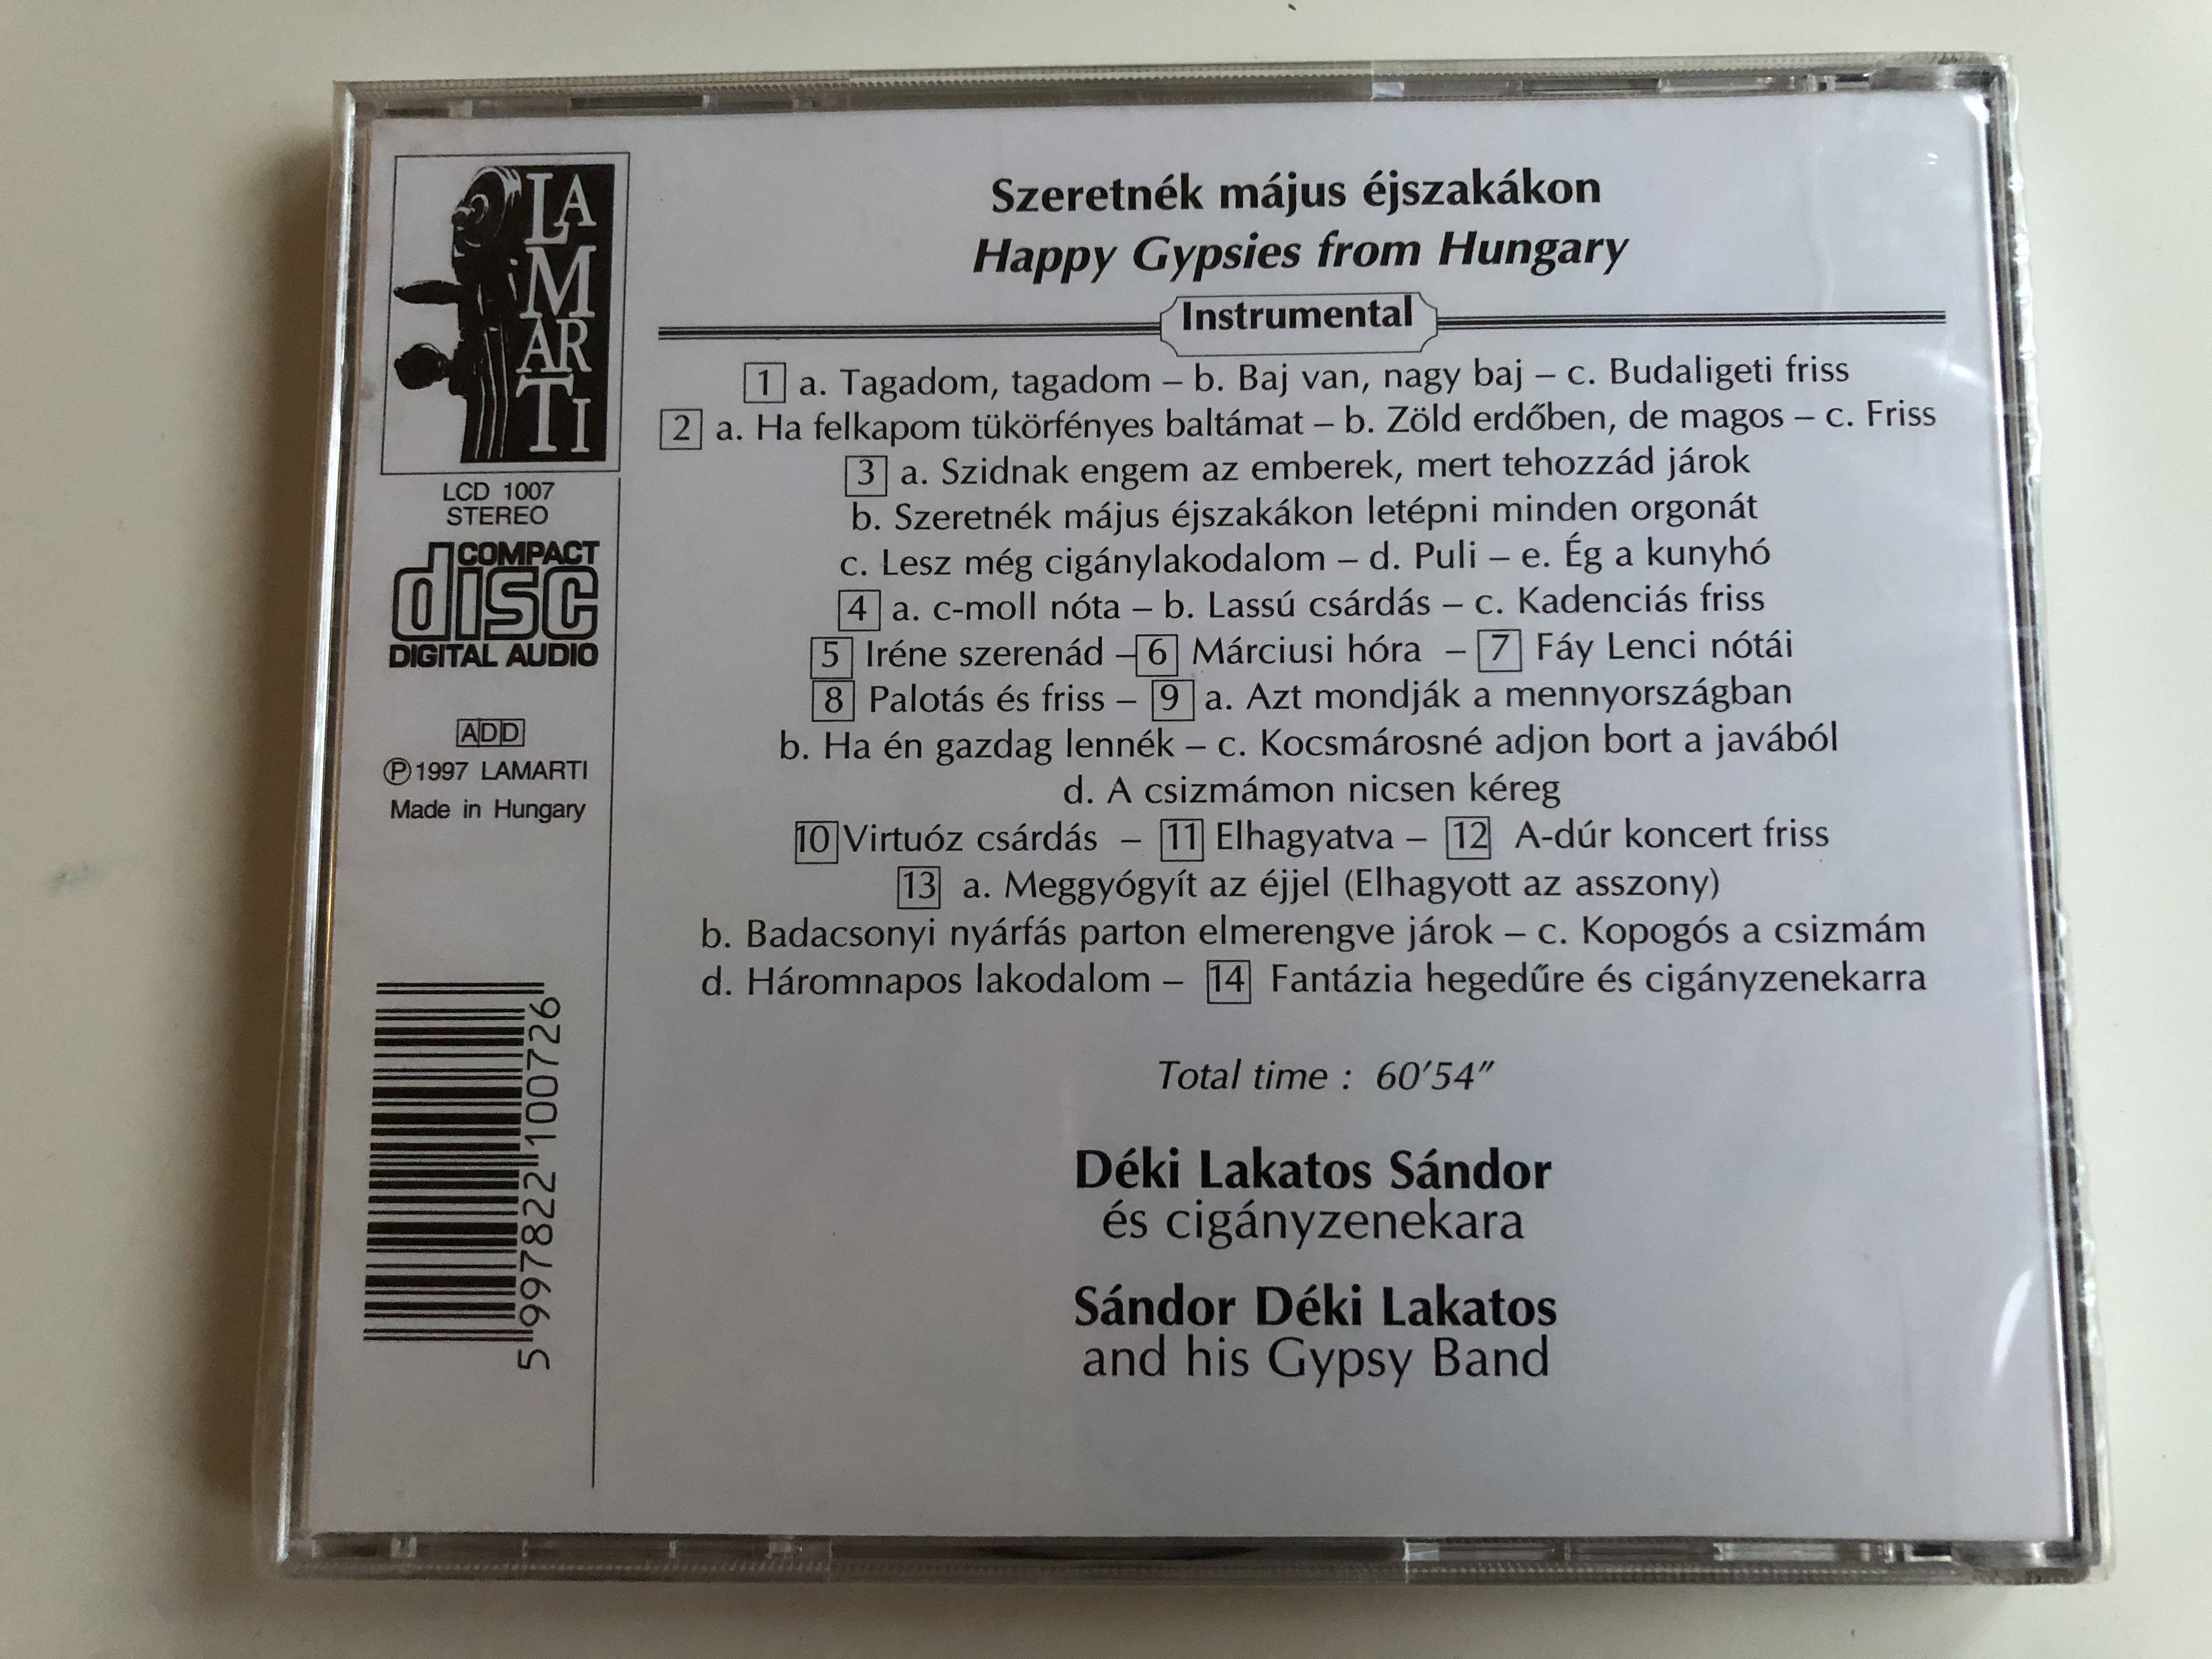 szeretn-k-m-jus-jszak-kon-happy-gypsies-from-hungary-s-ndor-d-ki-lakatos-and-his-gipsy-band-instrumental-lamarti-audio-cd-1997-stereo-lcd-1007-2-.jpg